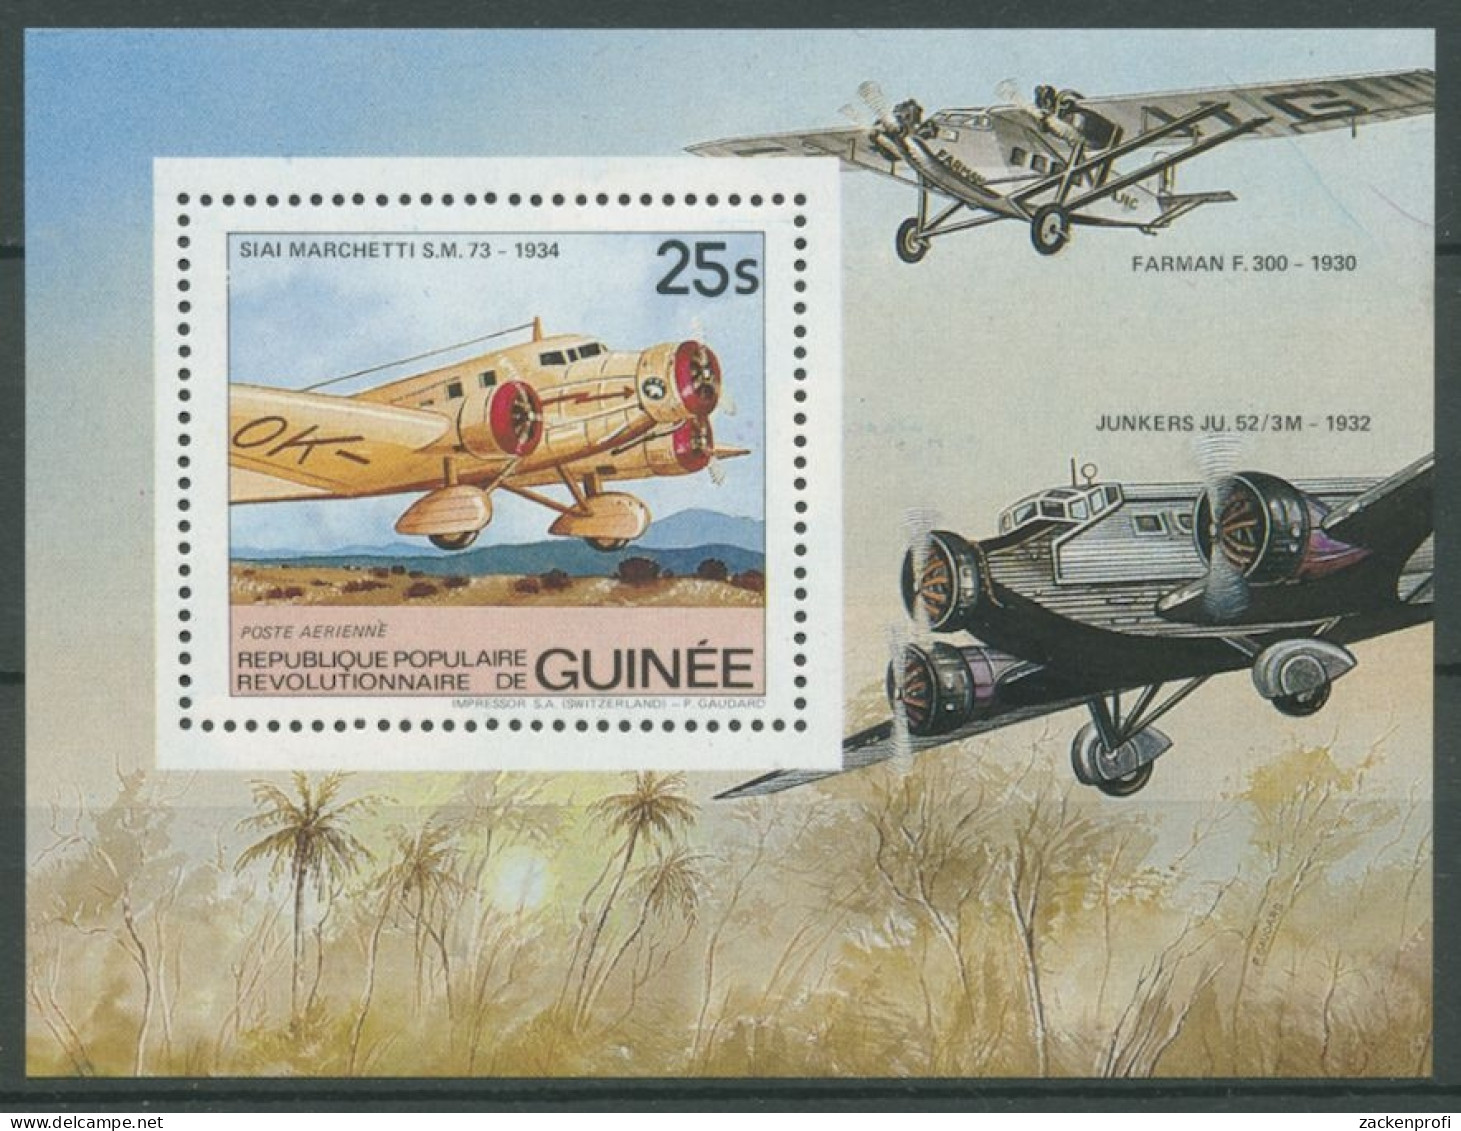 Guinea 1984 Verkehrsmittel Flugzeug Marcetti Block 95 A Postfrisch (C28228) - República De Guinea (1958-...)